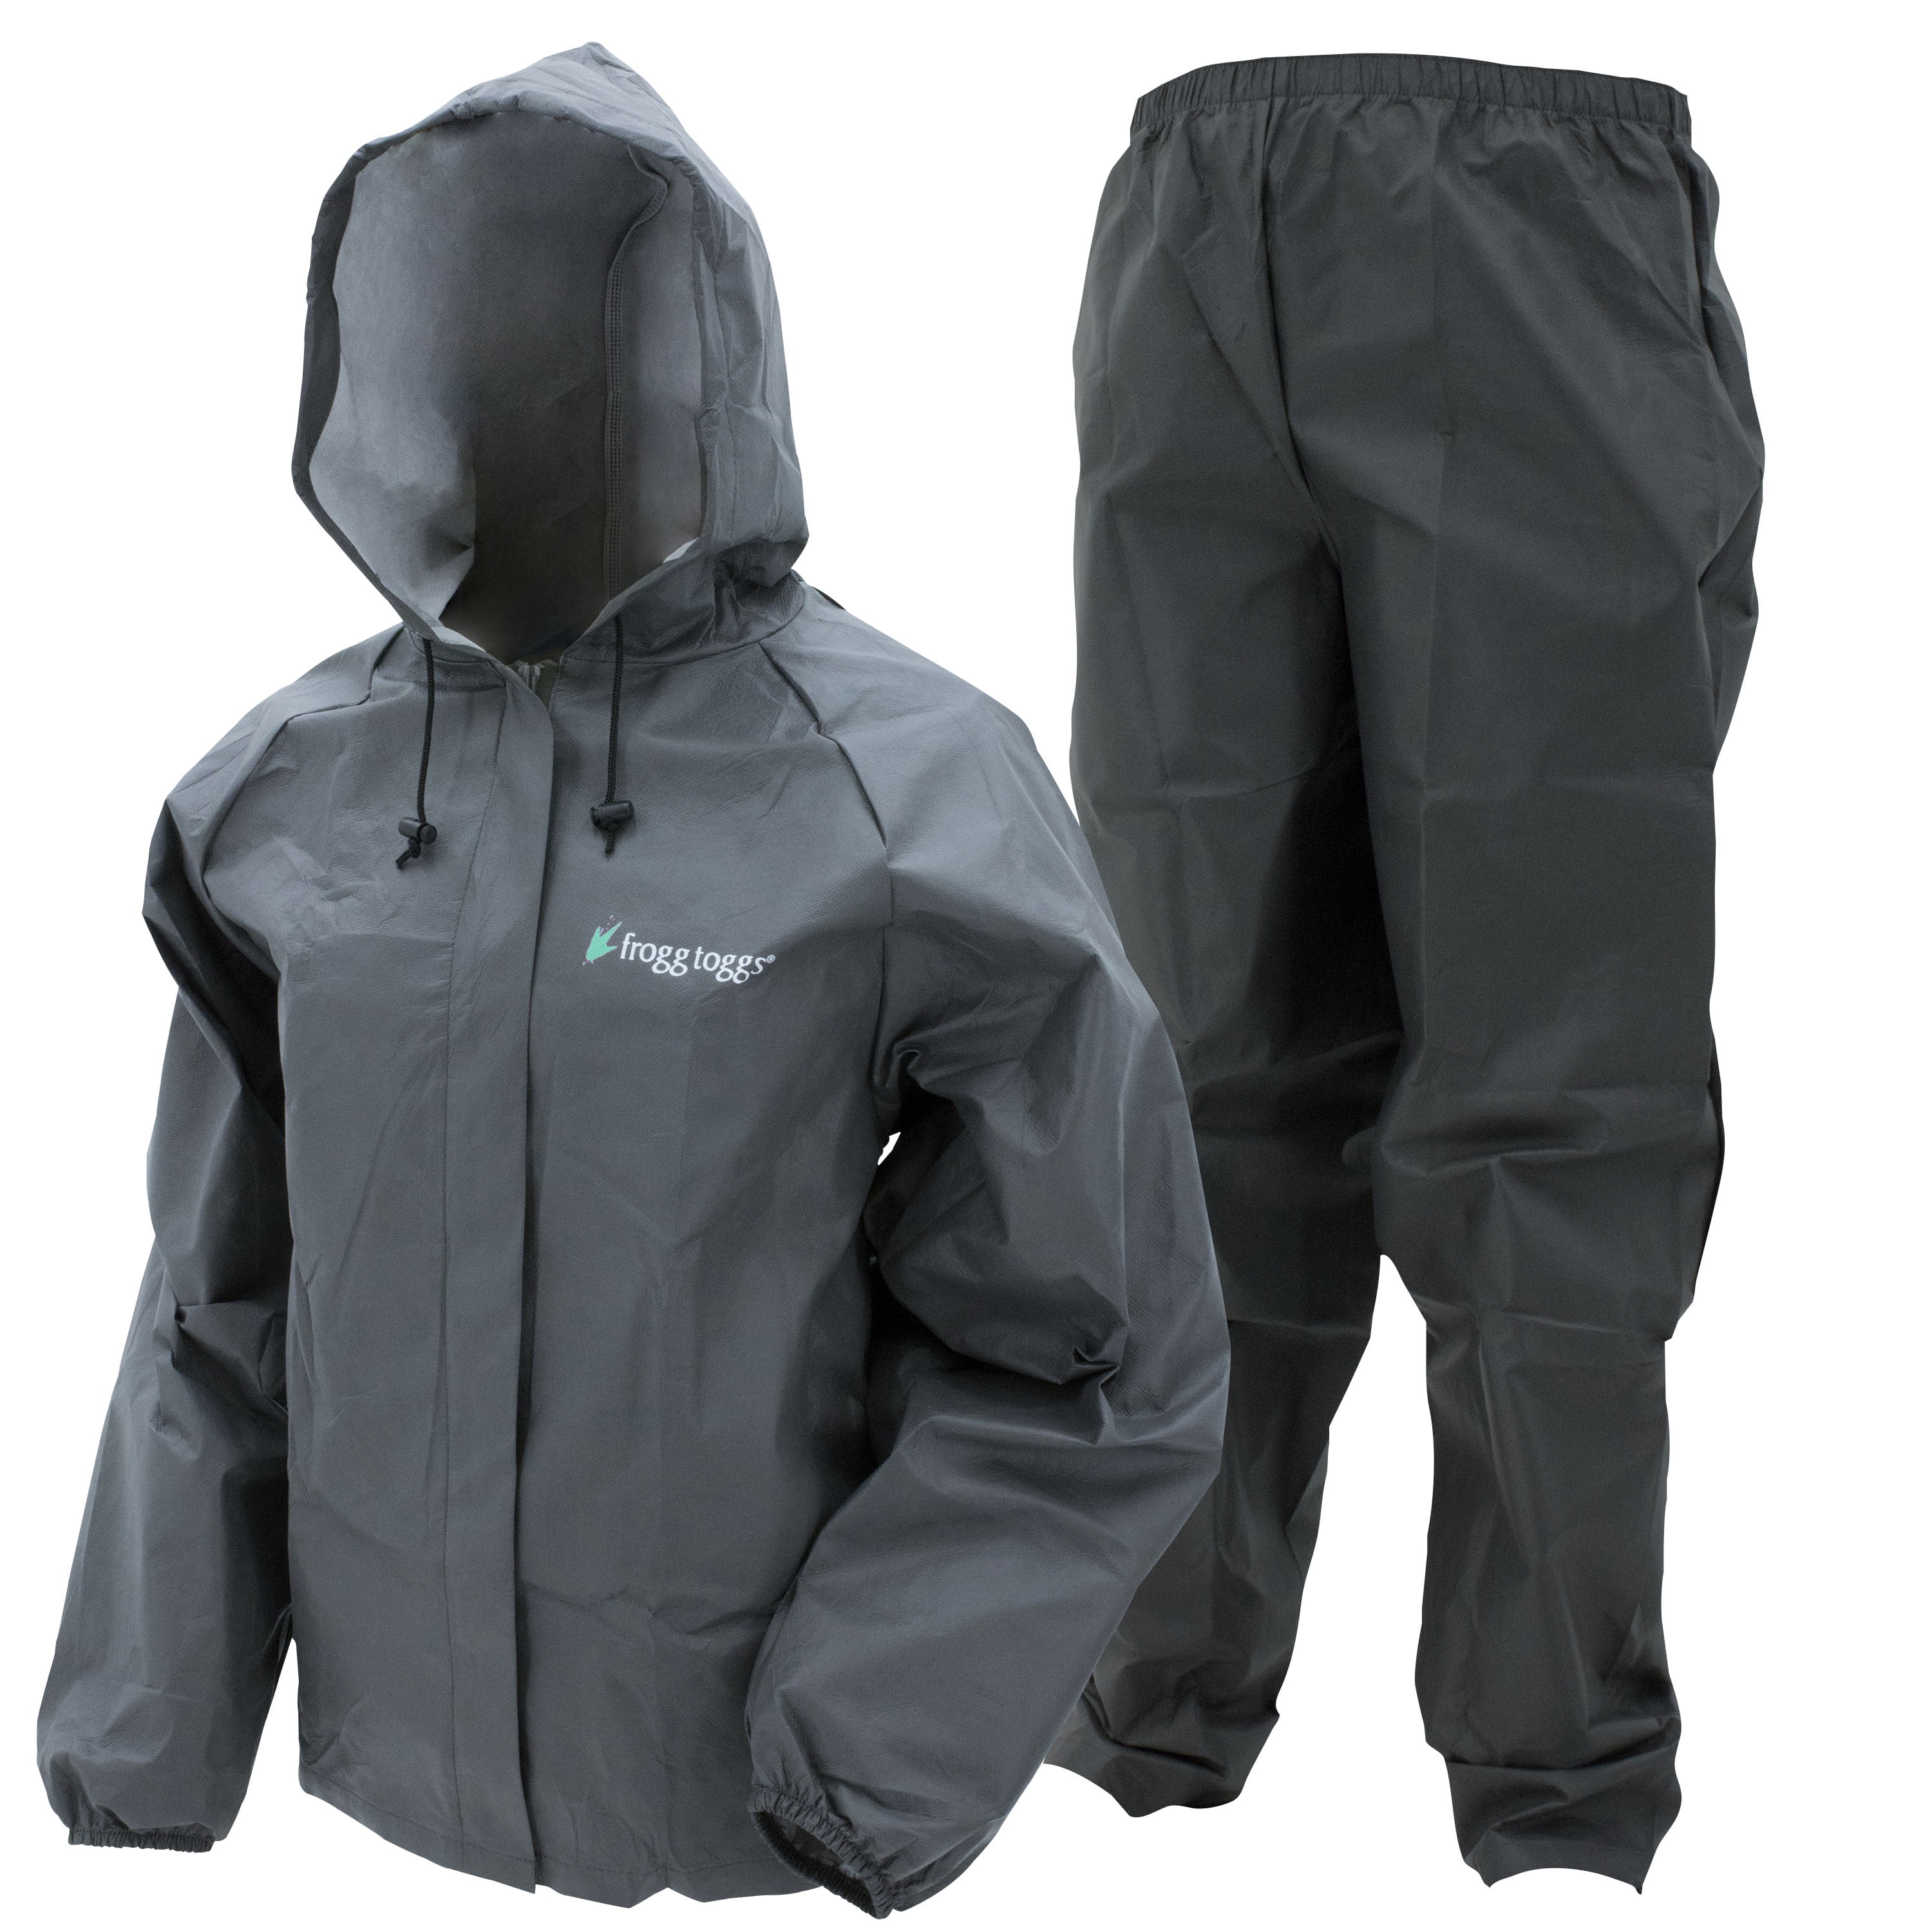 Frogg Toggs Women's Ultra-Lite Rain Suit, Carbon Black, Size LG/XL